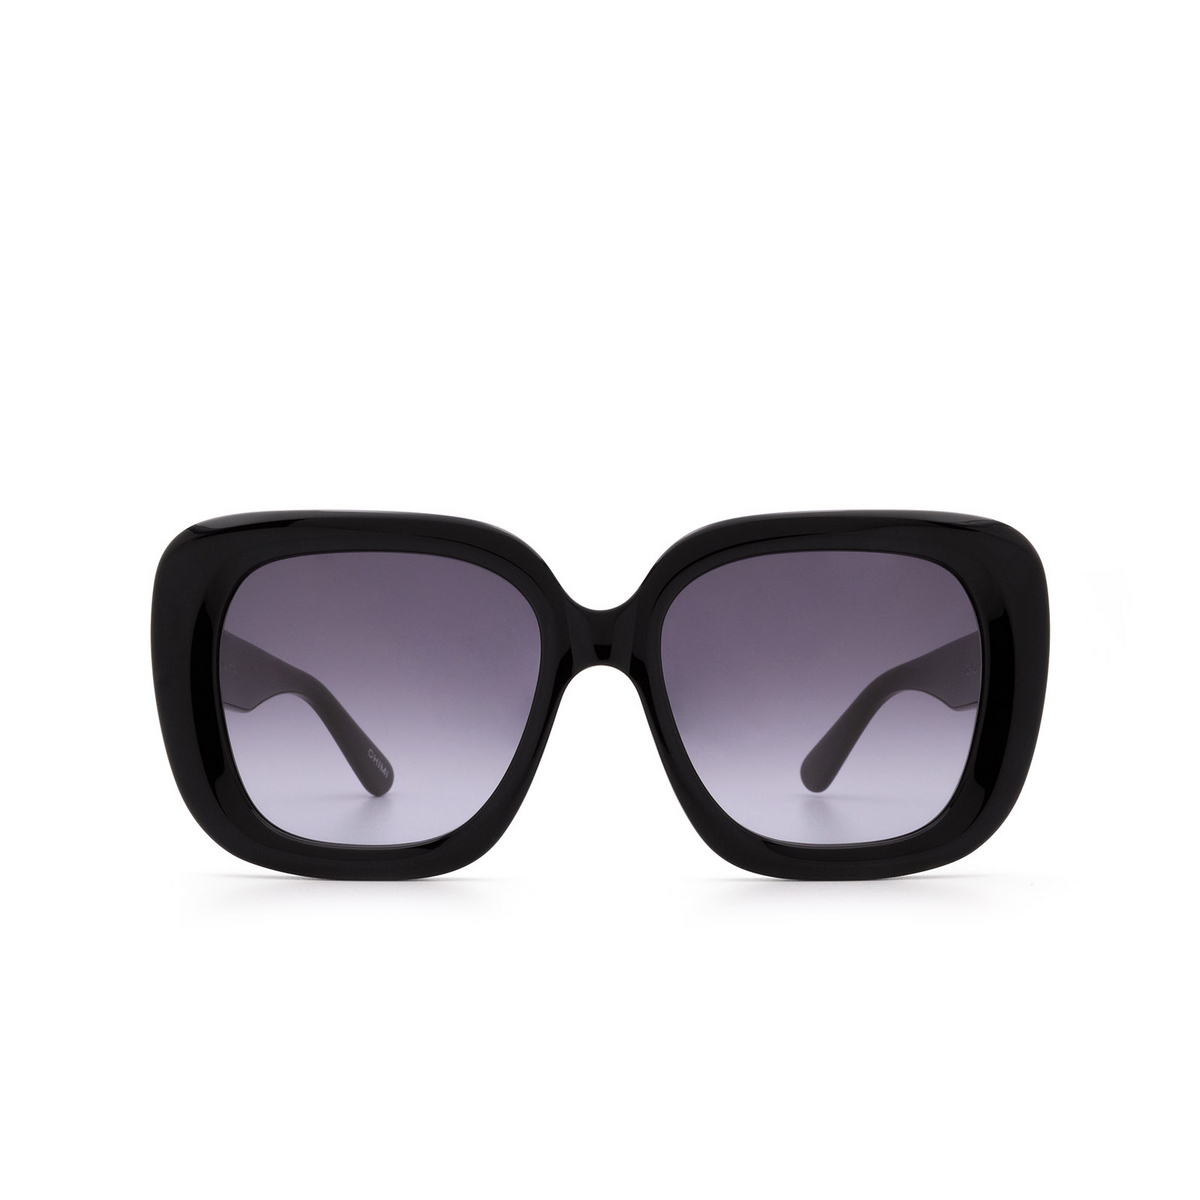 Chimi® Square Sunglasses: #108 color Black - front view.